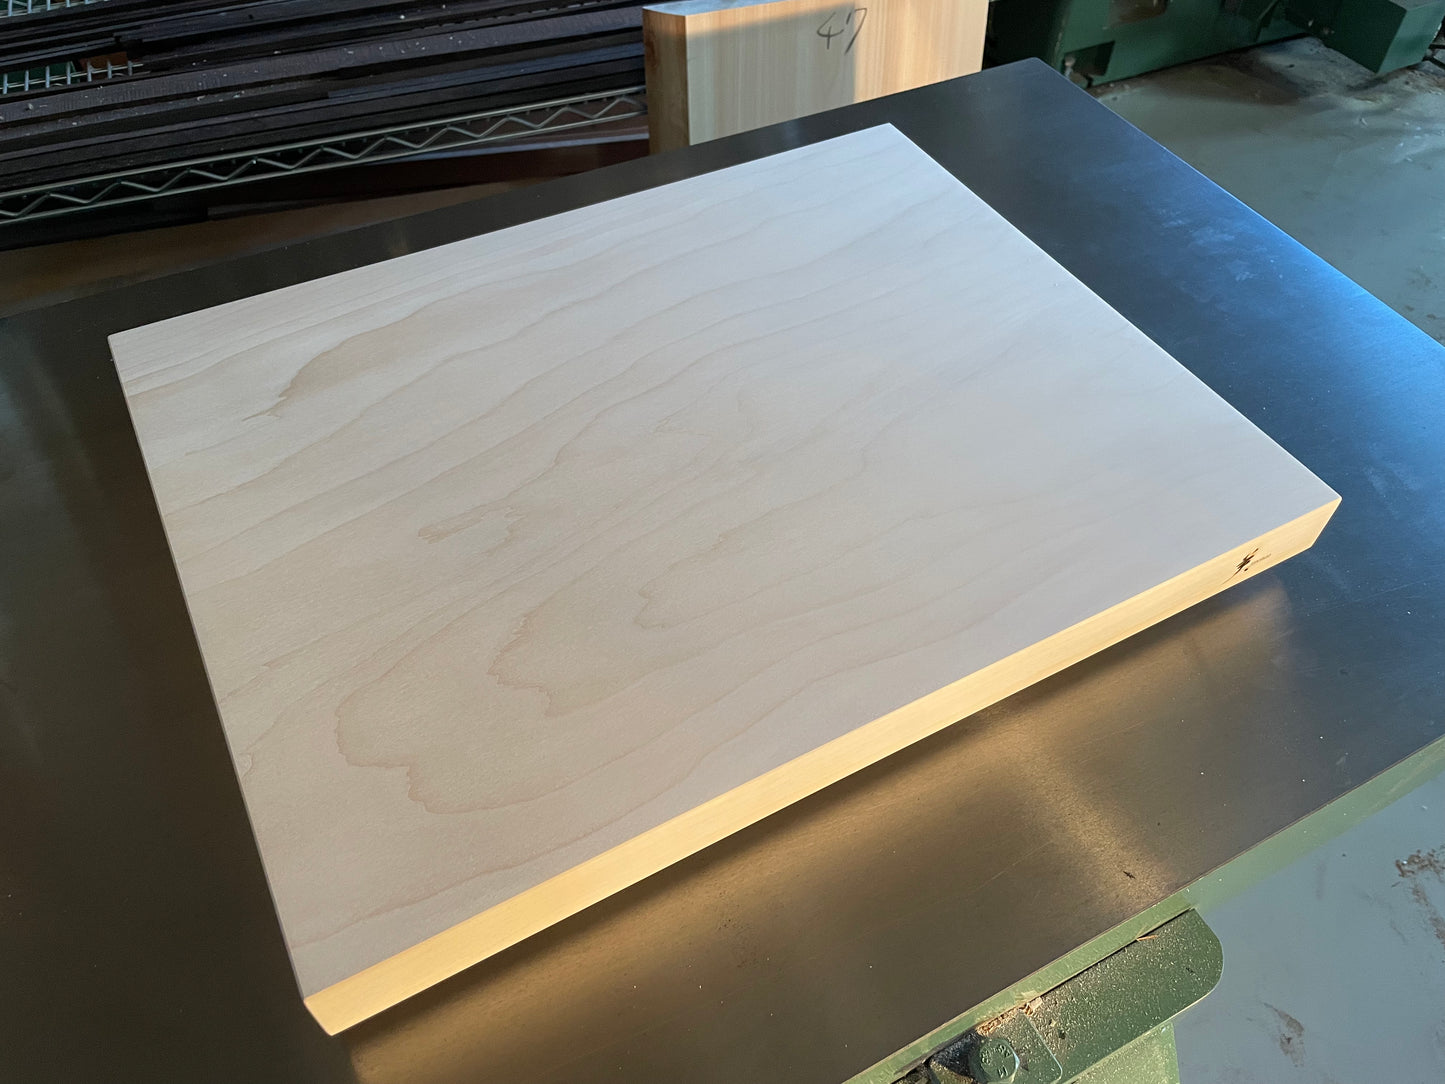 GINKGO Cutting board Large size.